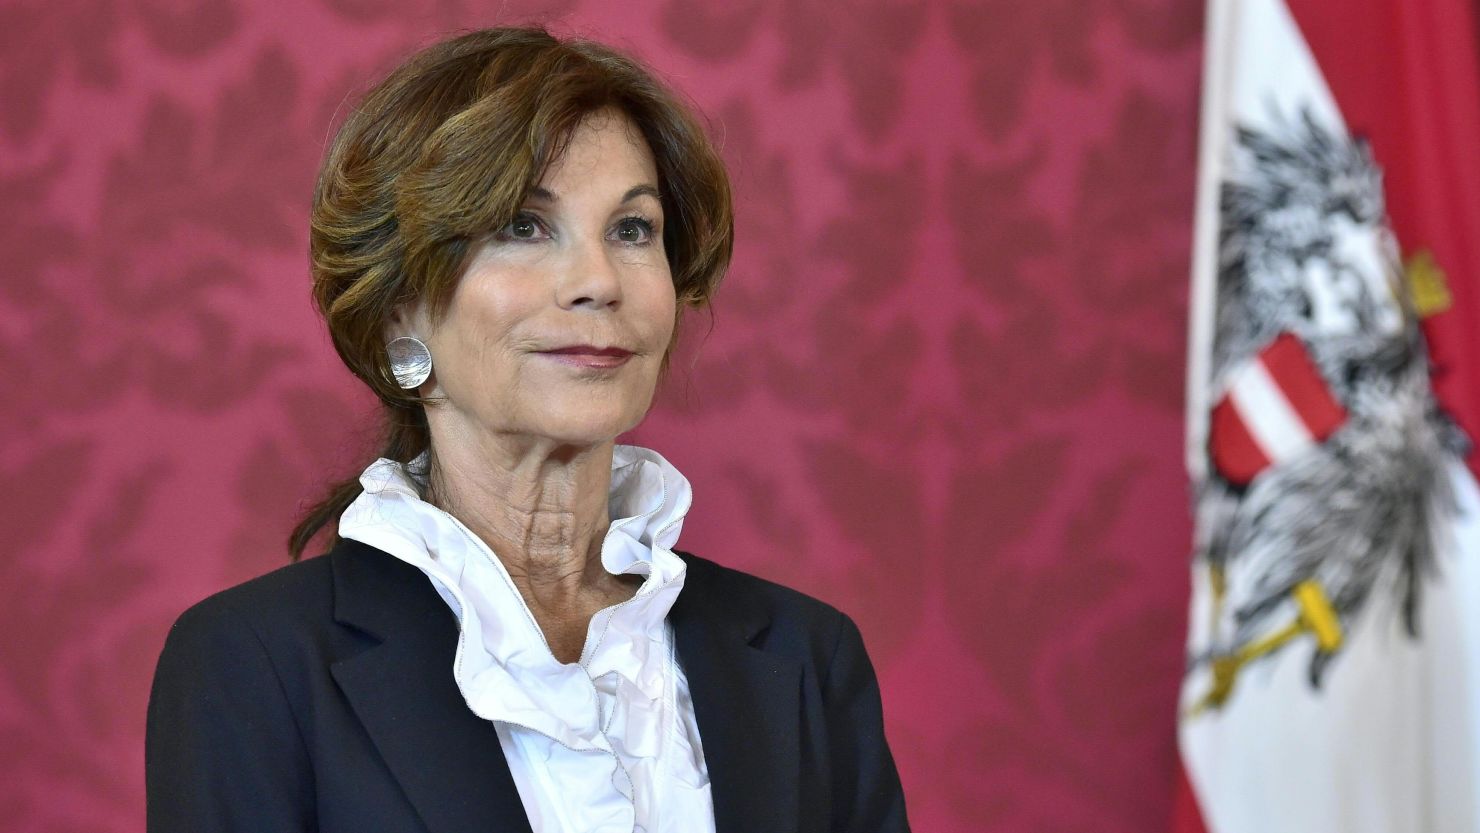 Brigitte Bierlein looks on as Austria's President names her as interim chancellor on Thursday. 